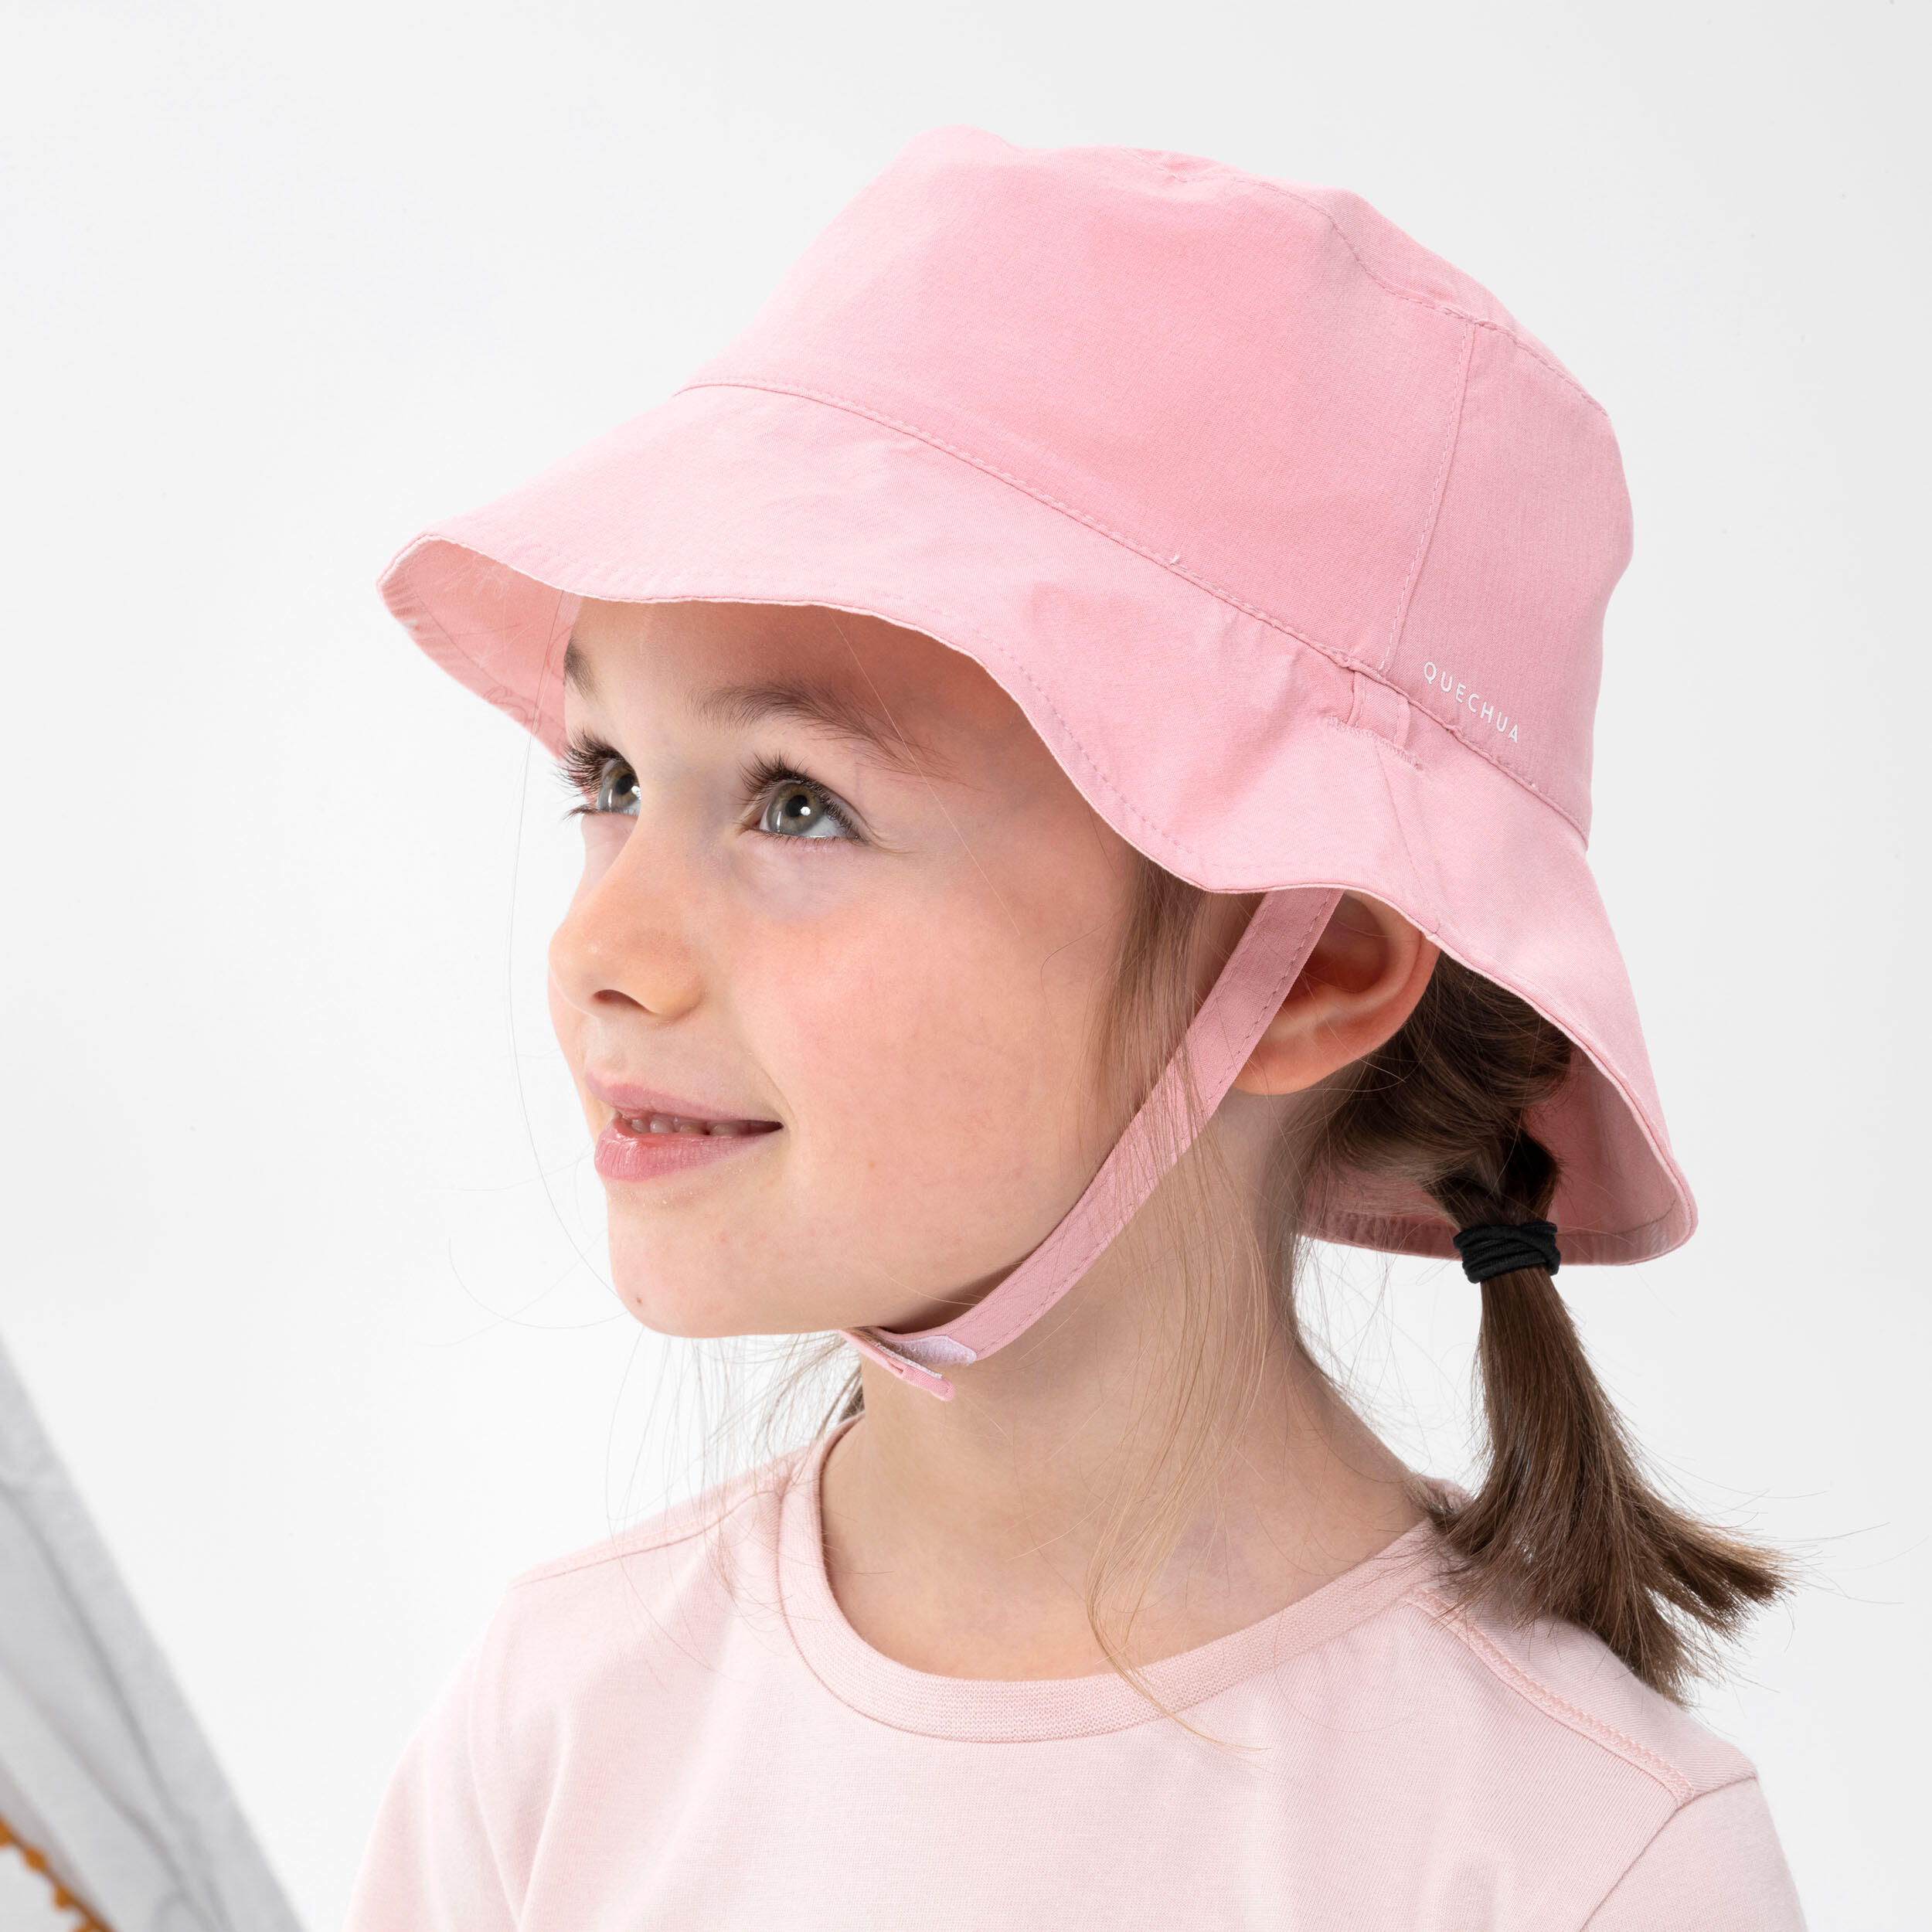 Kids’ Hiking Anti-UV Hat - MH 100 - Old pink, Pink - Quechua - Decathlon